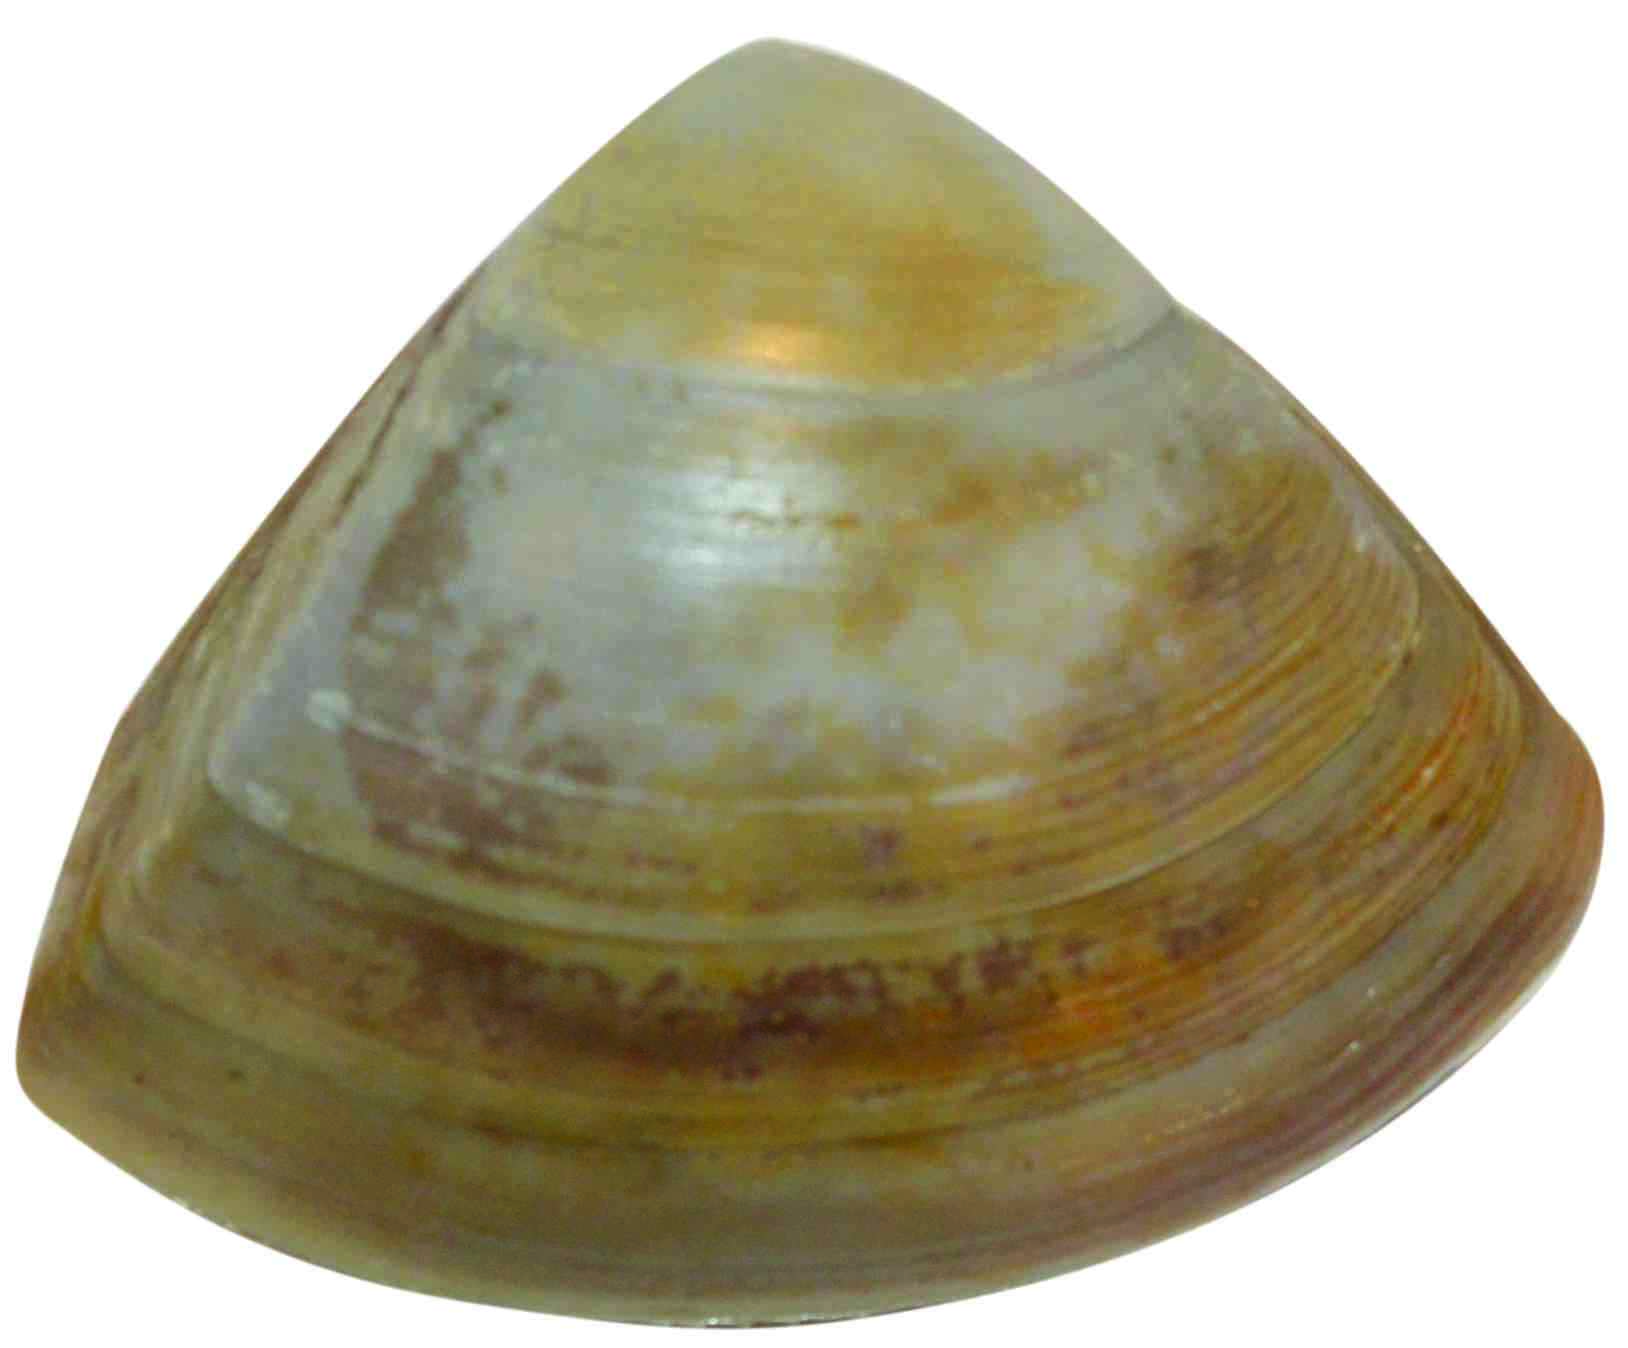 Triangular trough clam